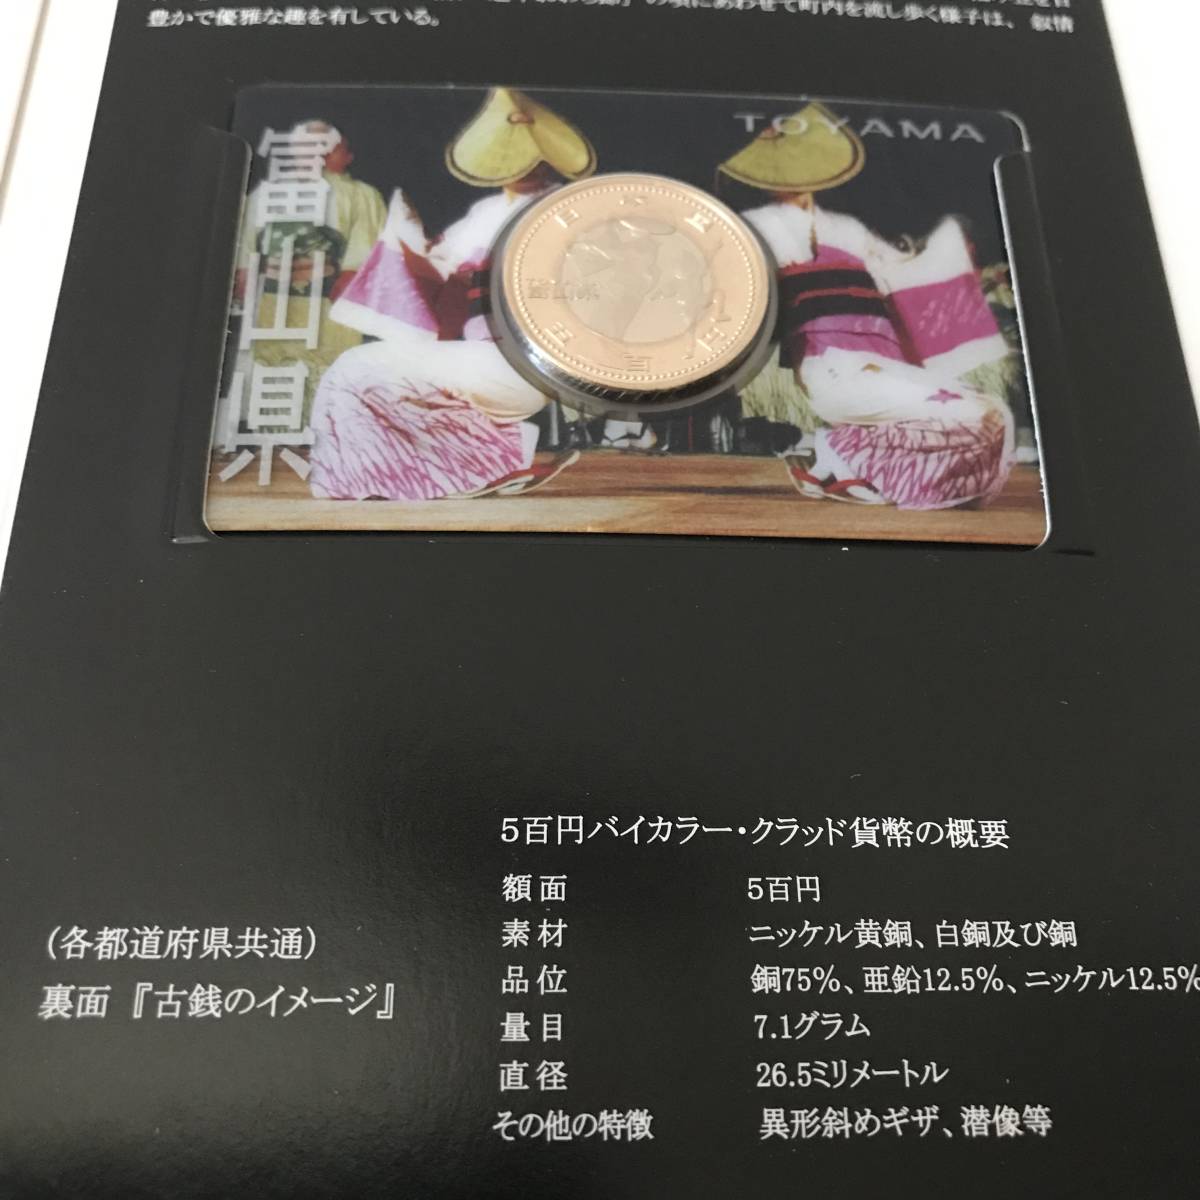 22K340 T 富山県 地方自治法施行60周年記念シリーズ 記念貨幣入り切手帳 平成23年_画像6